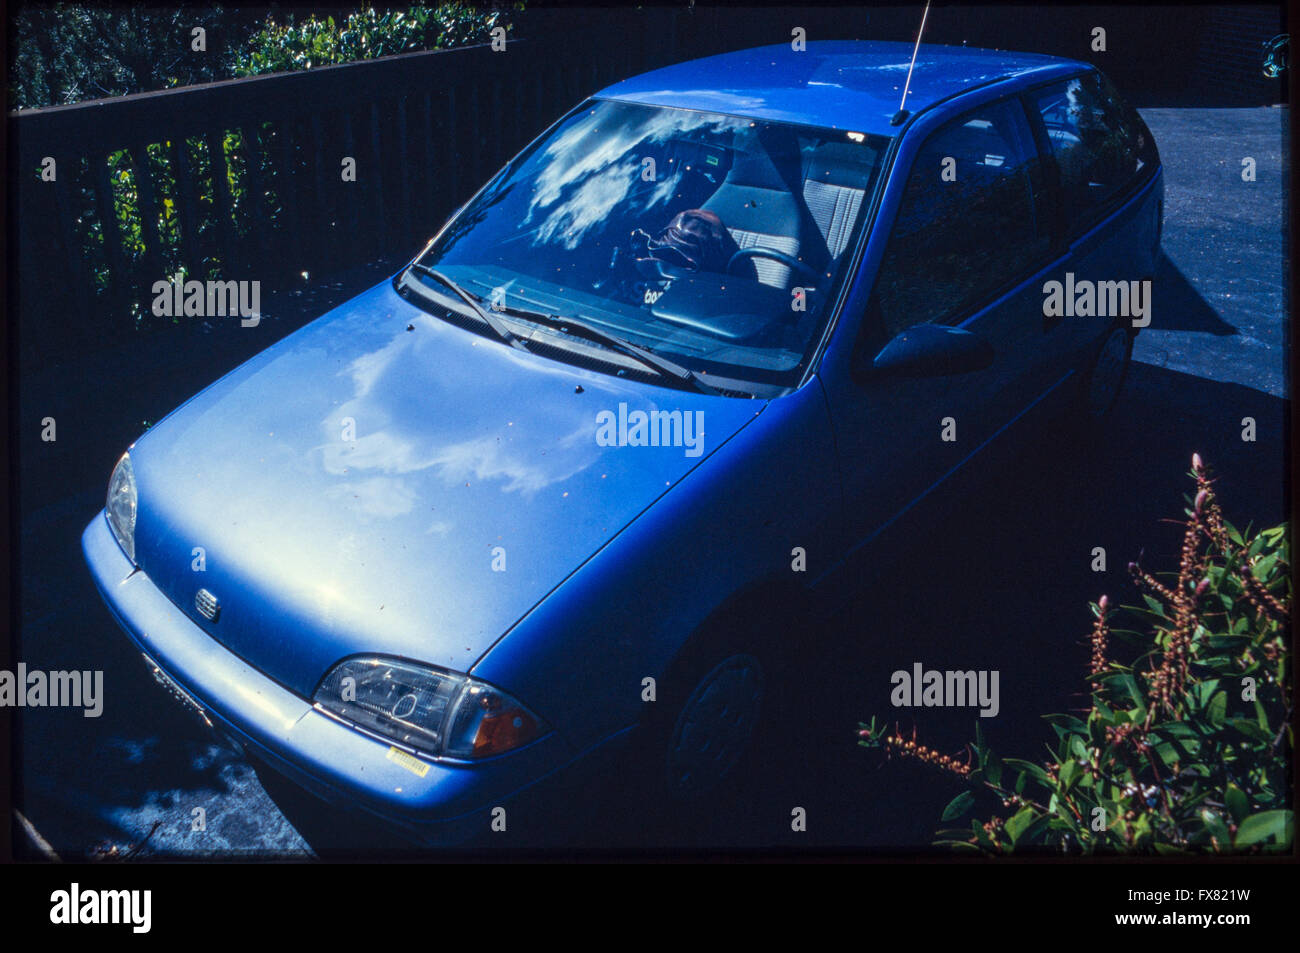 Archive image of a metallic blue 1990 model Geo Metro 3-door subcompact hatchback car on a suburban drive in San Rafael, California, USA, 1990 Stock Photo